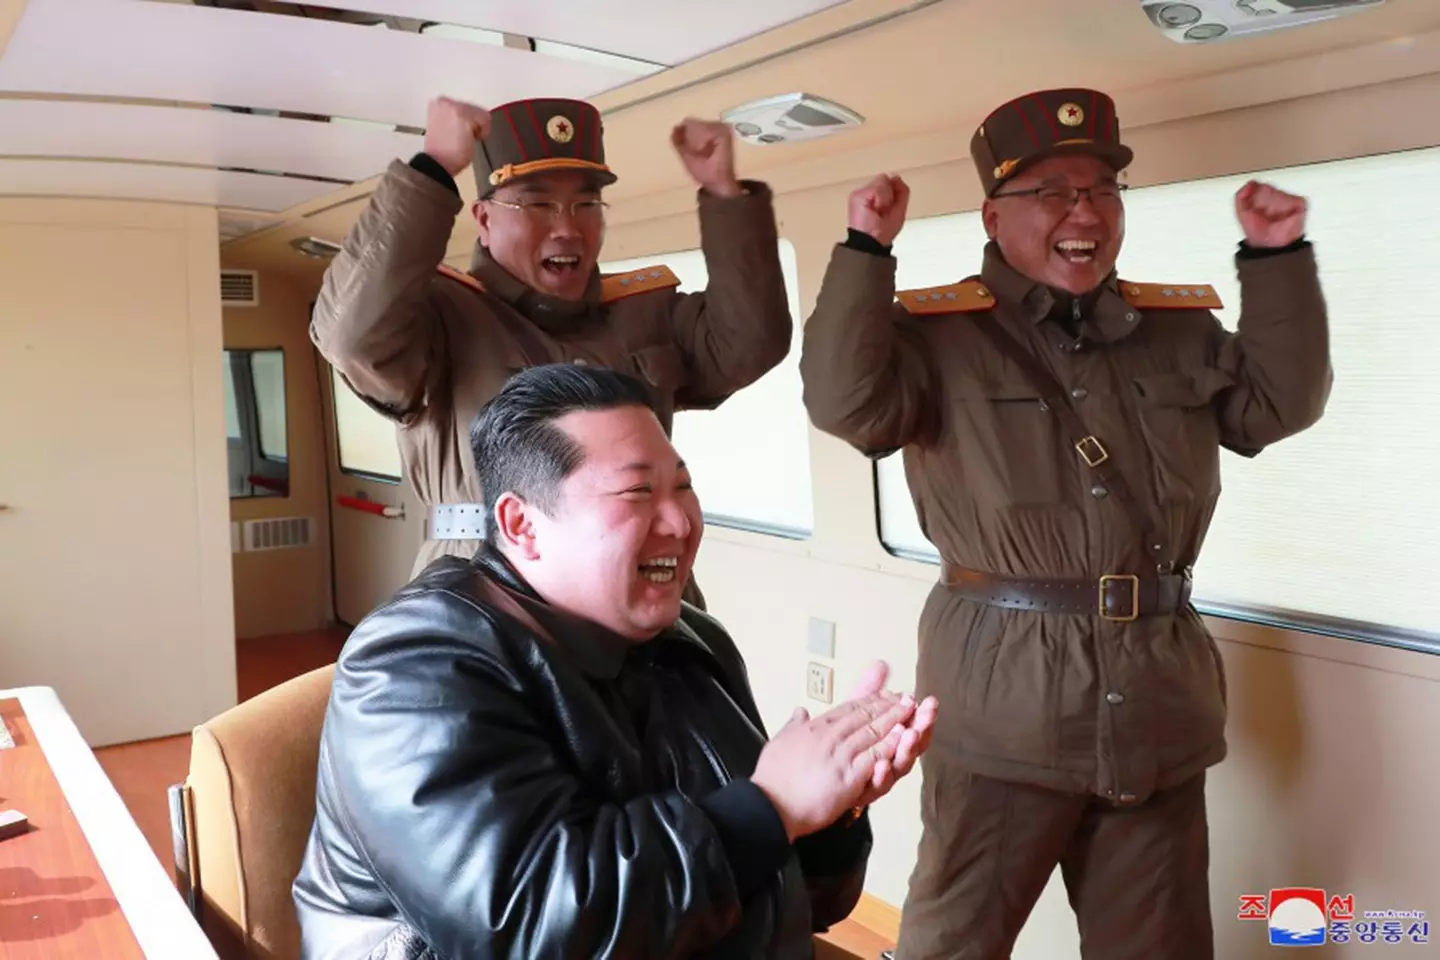 North Korean leader Kim Jong-un overseeing missile launch,